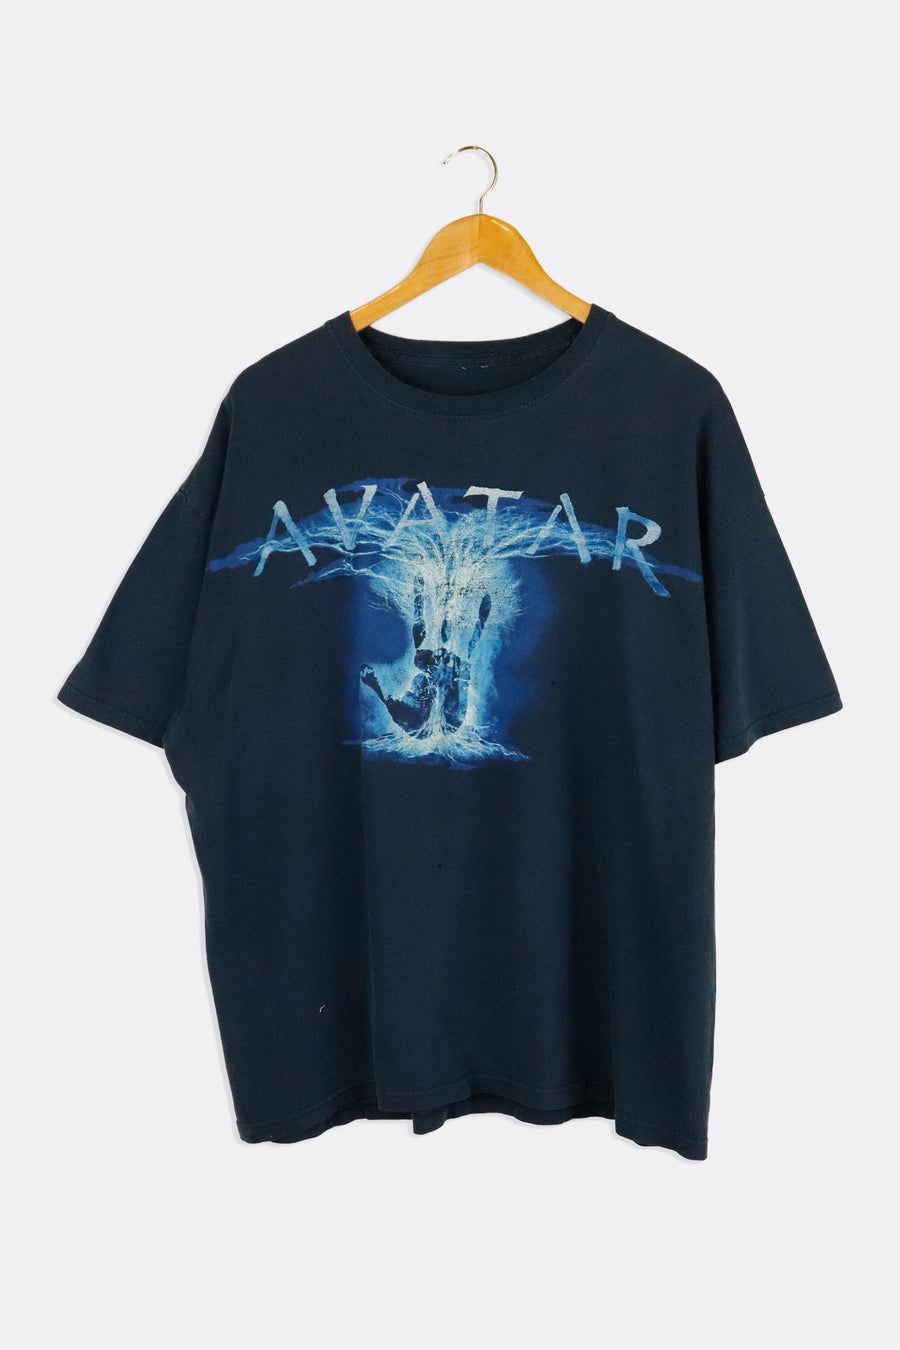 Vintage Avatar Hand With Blue Neon Water Vinyl T Shirt